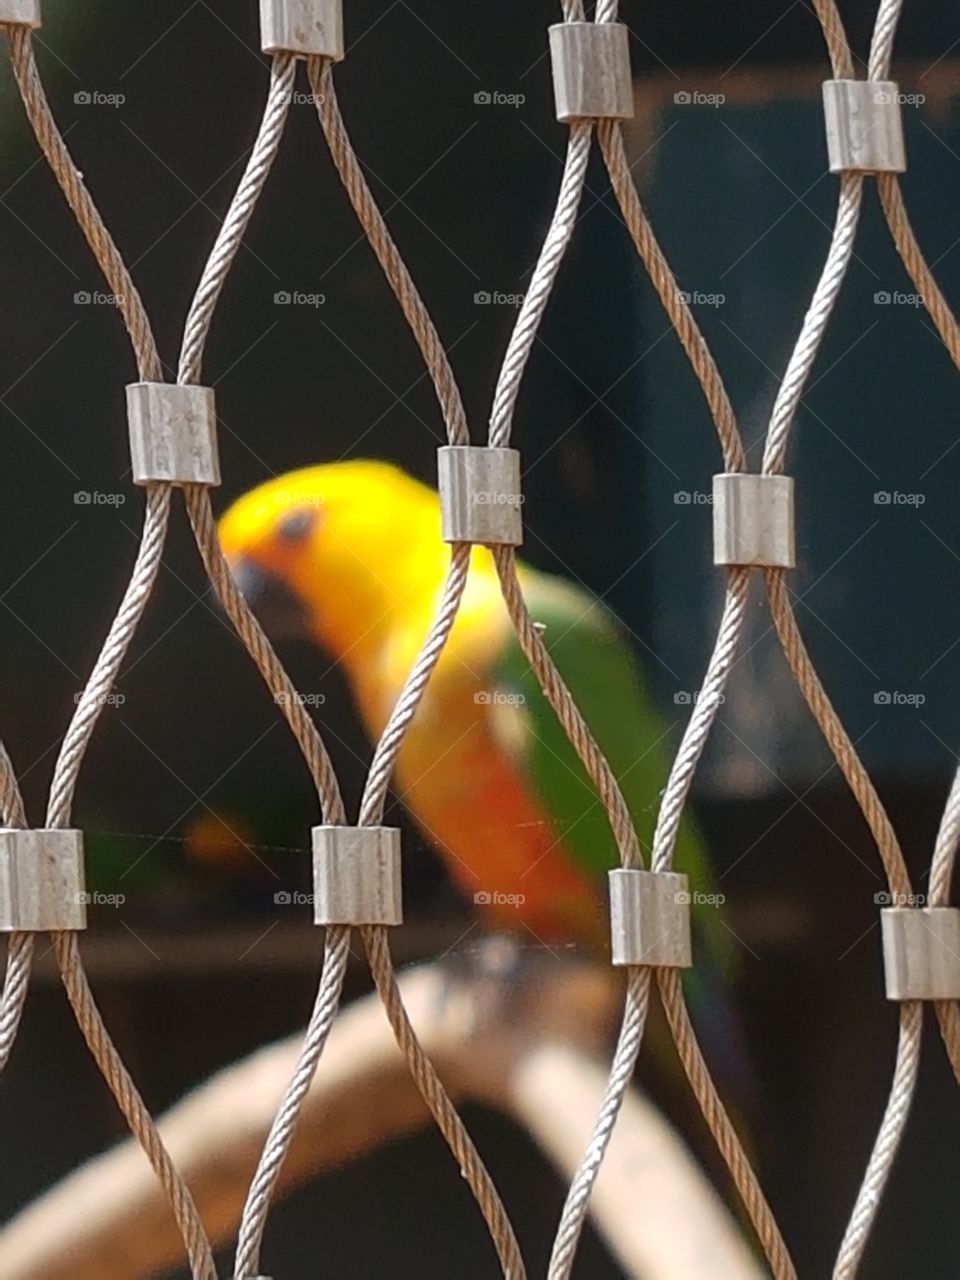 bird prison jail sentence